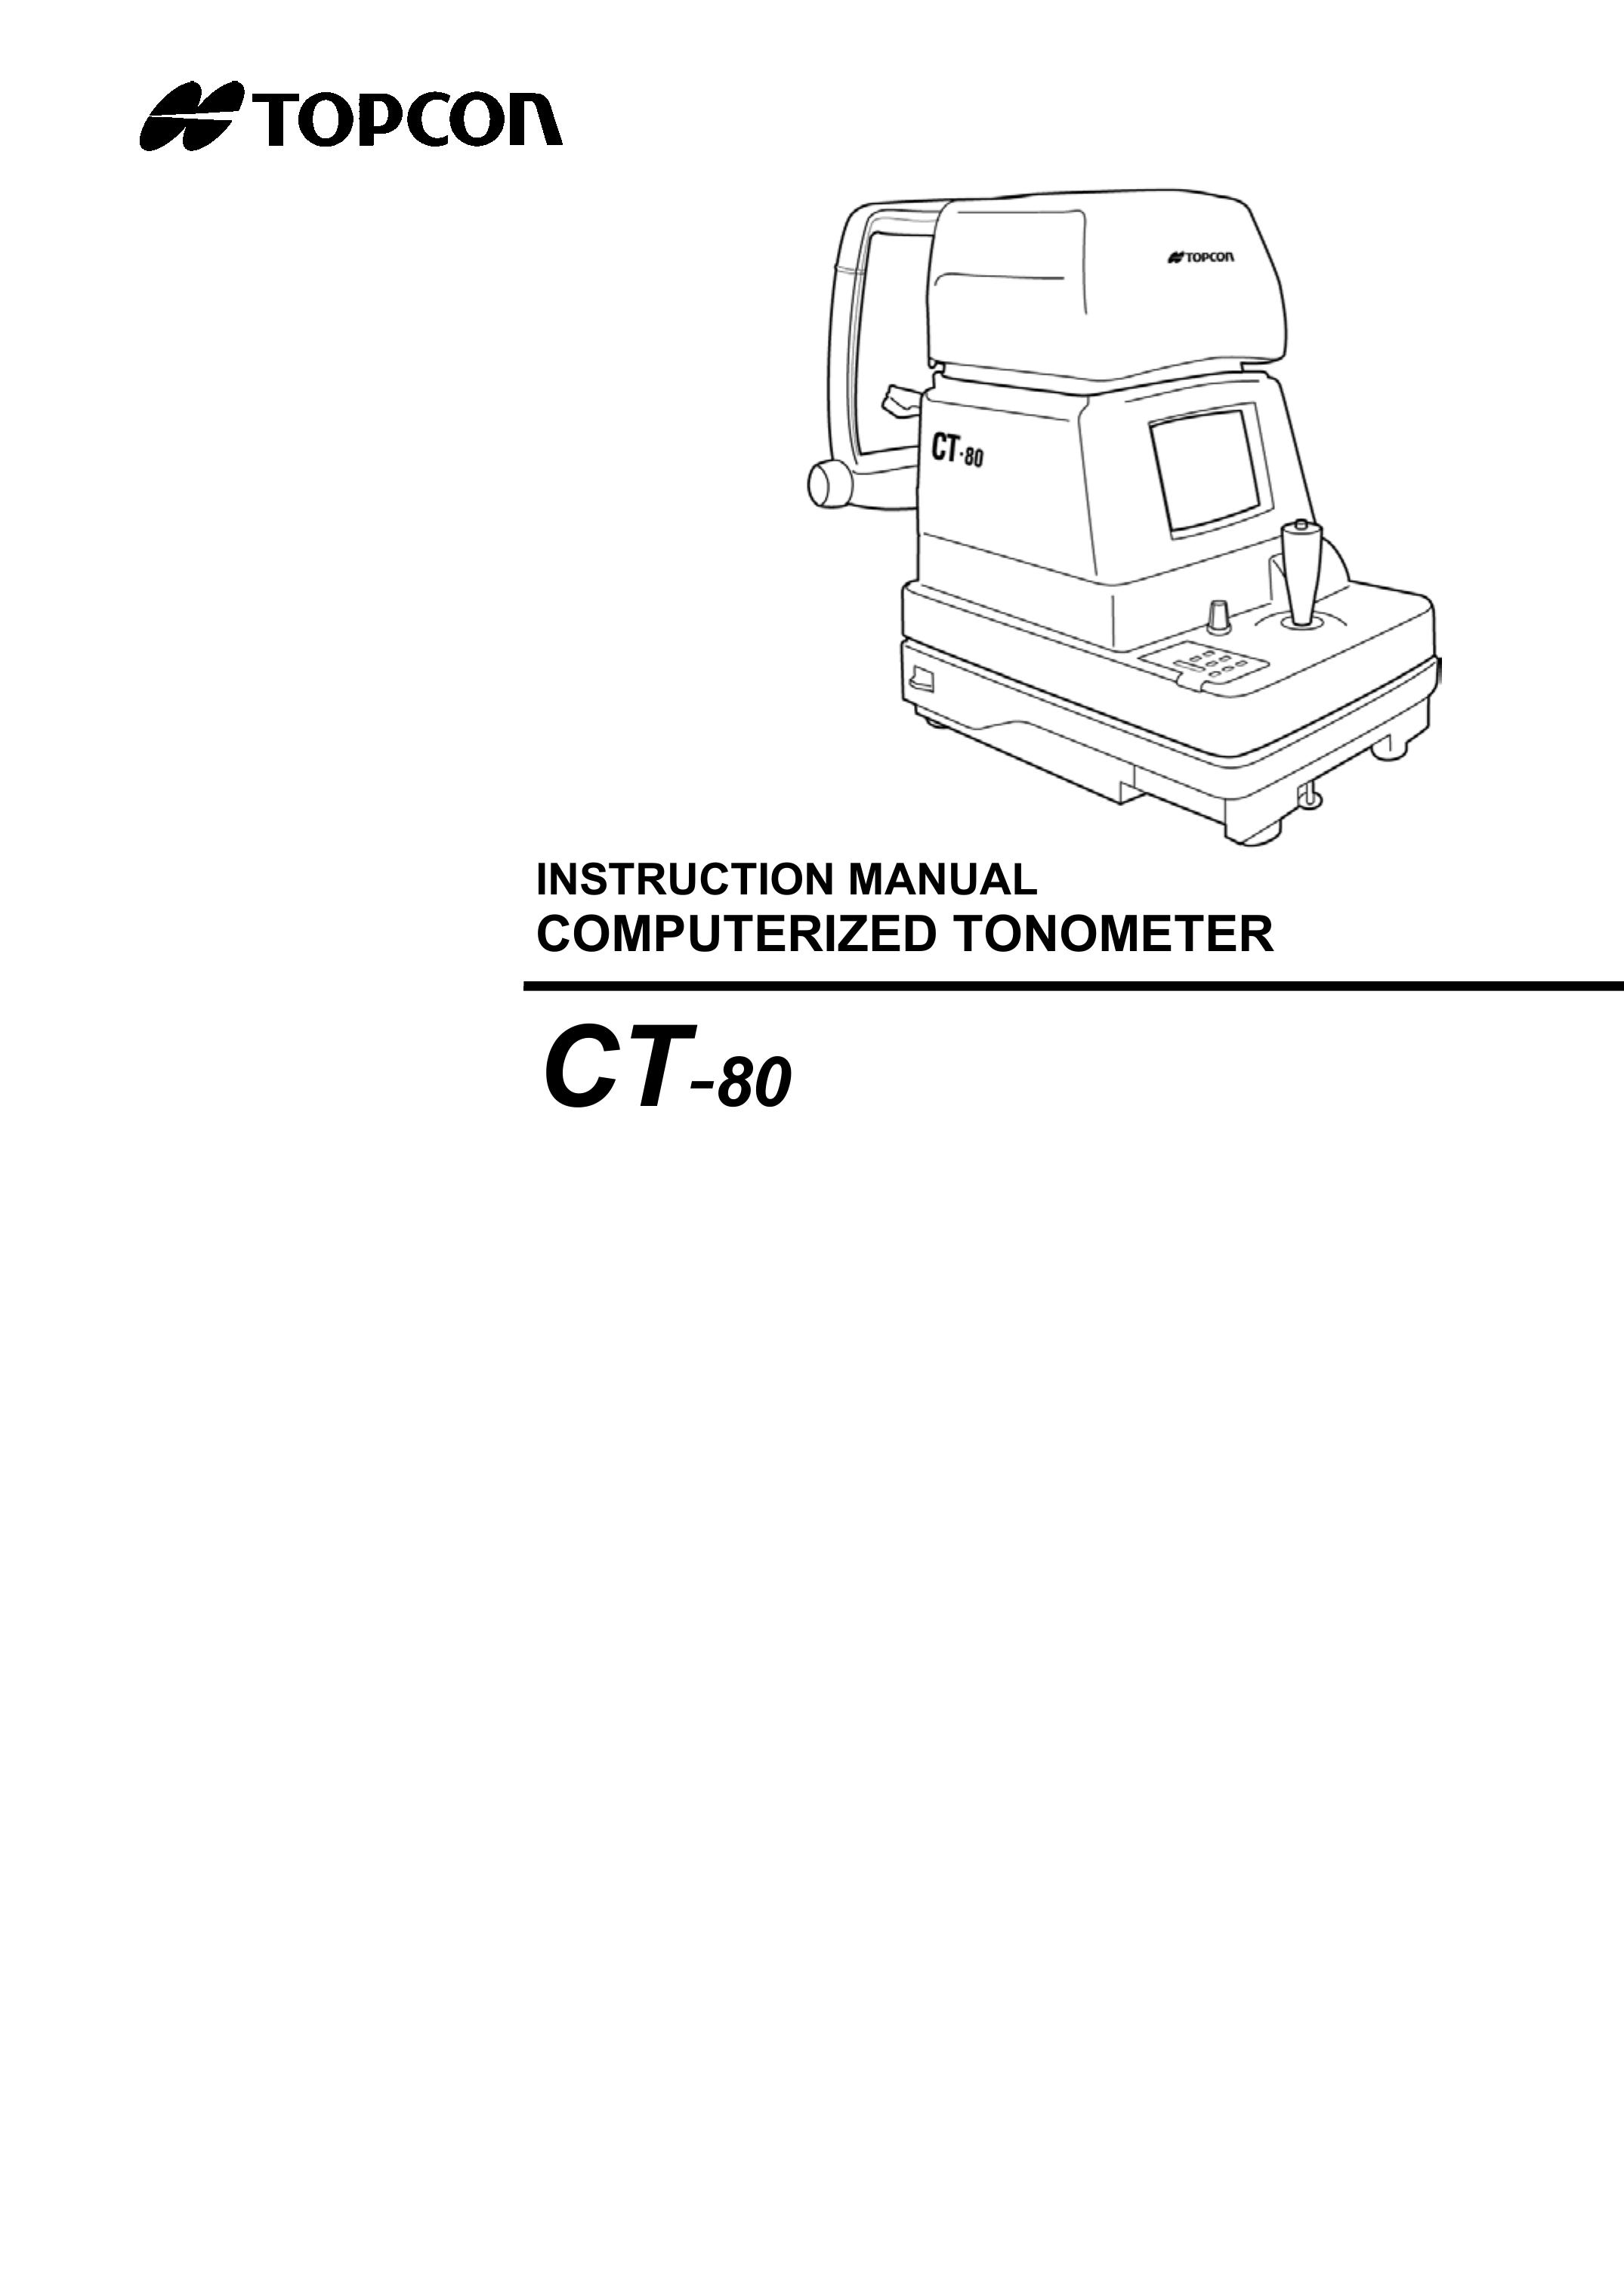 Topcon COMPUTERIZED TONOMETER Multi-tool User Manual